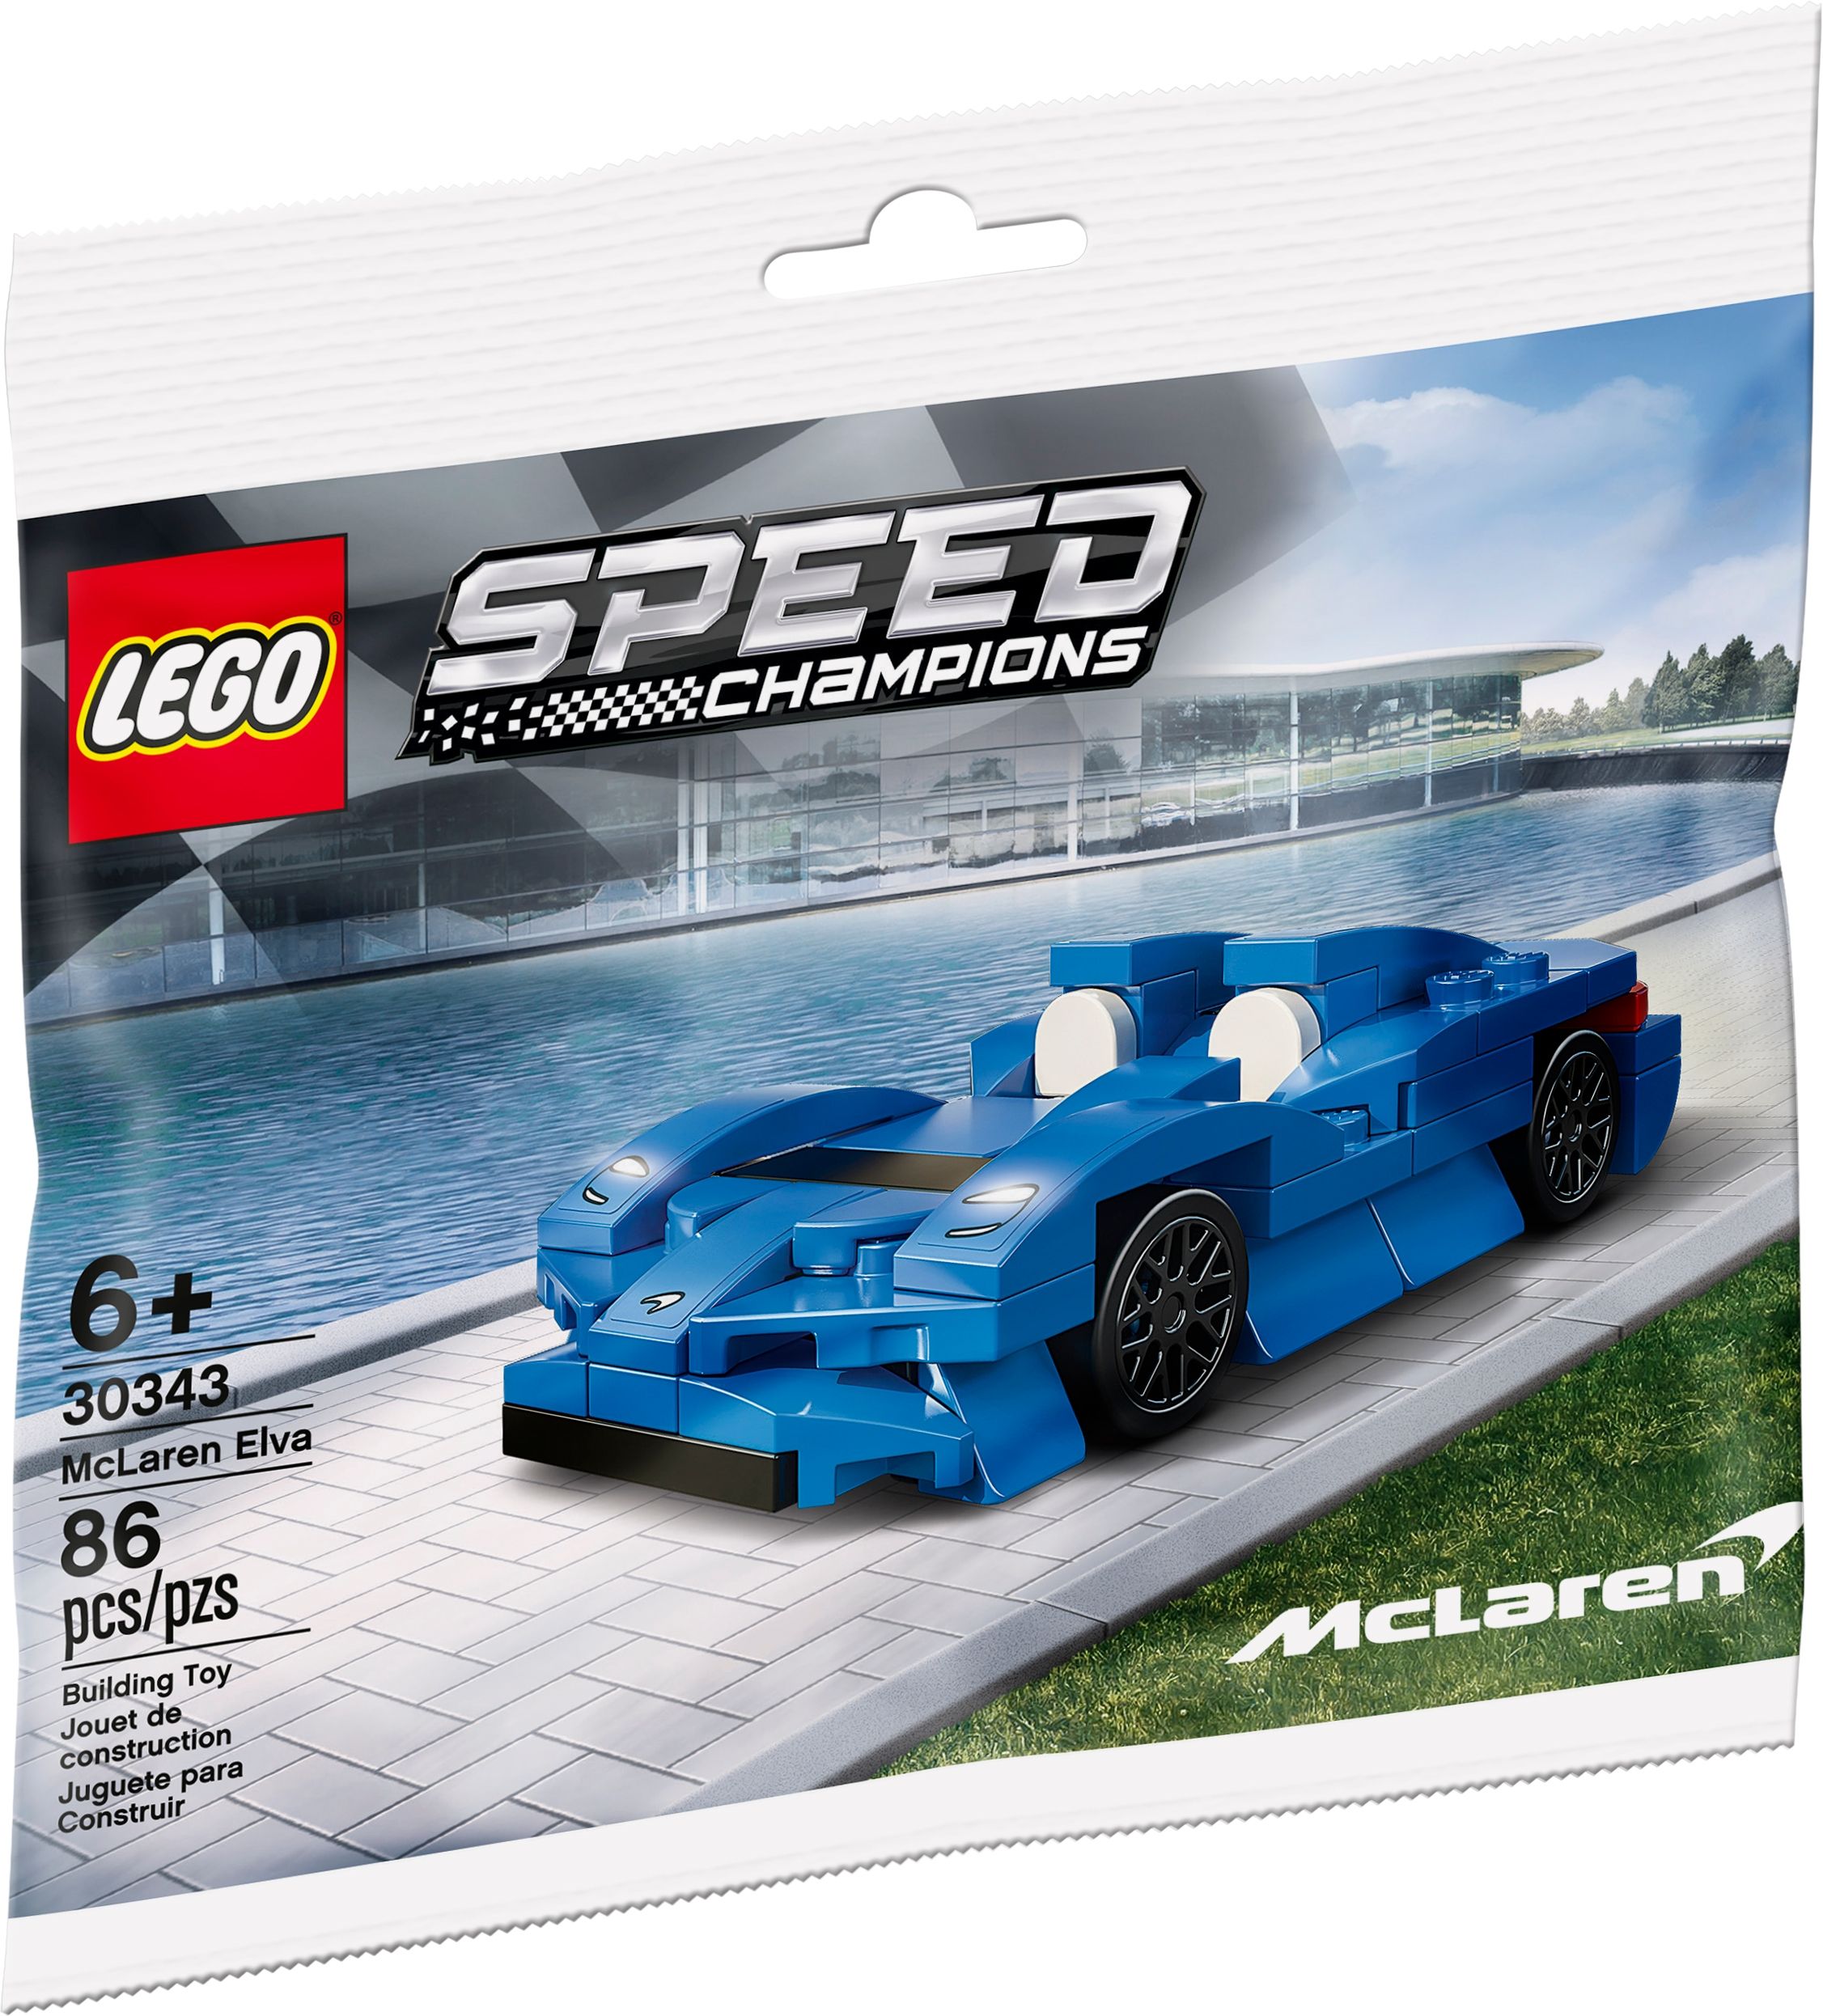 LEGO Speed Champions 30343 McLaren Elva LEGO_30343_alt1.jpg